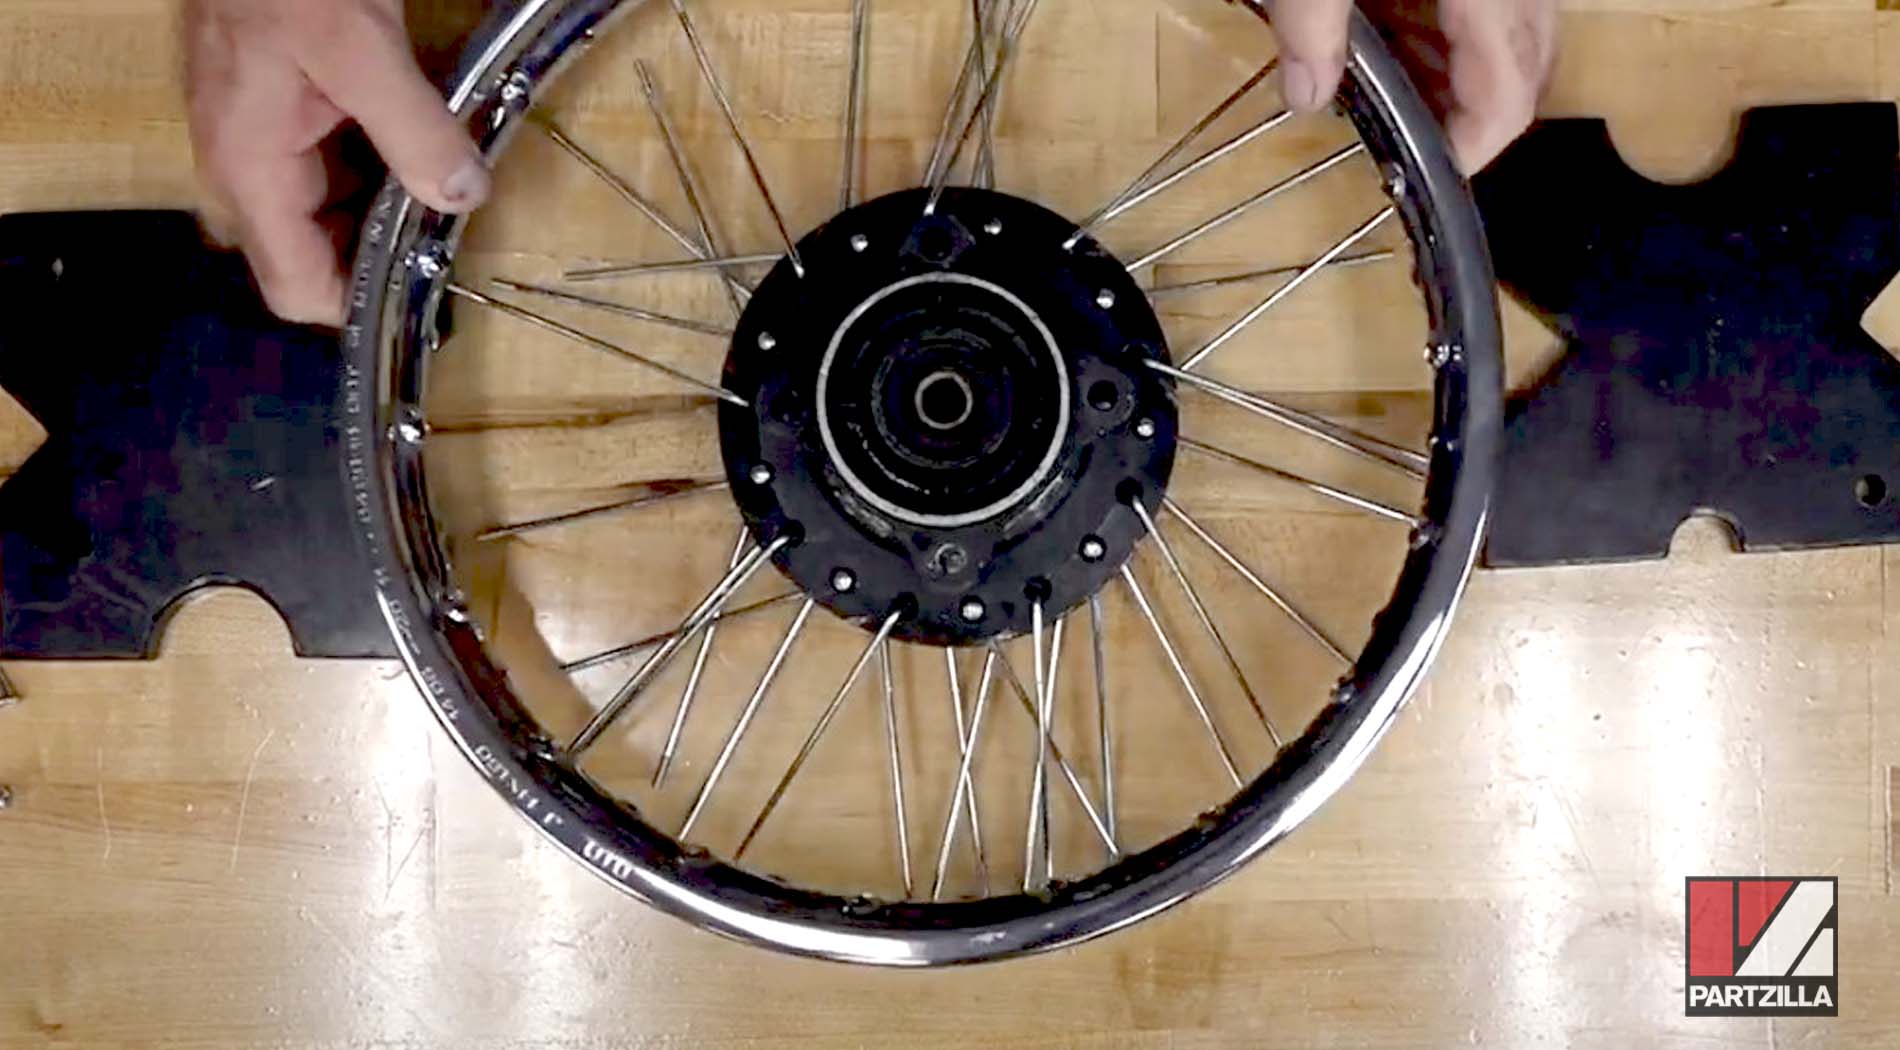 How to lace spokes onto a dirt bike wheel rim